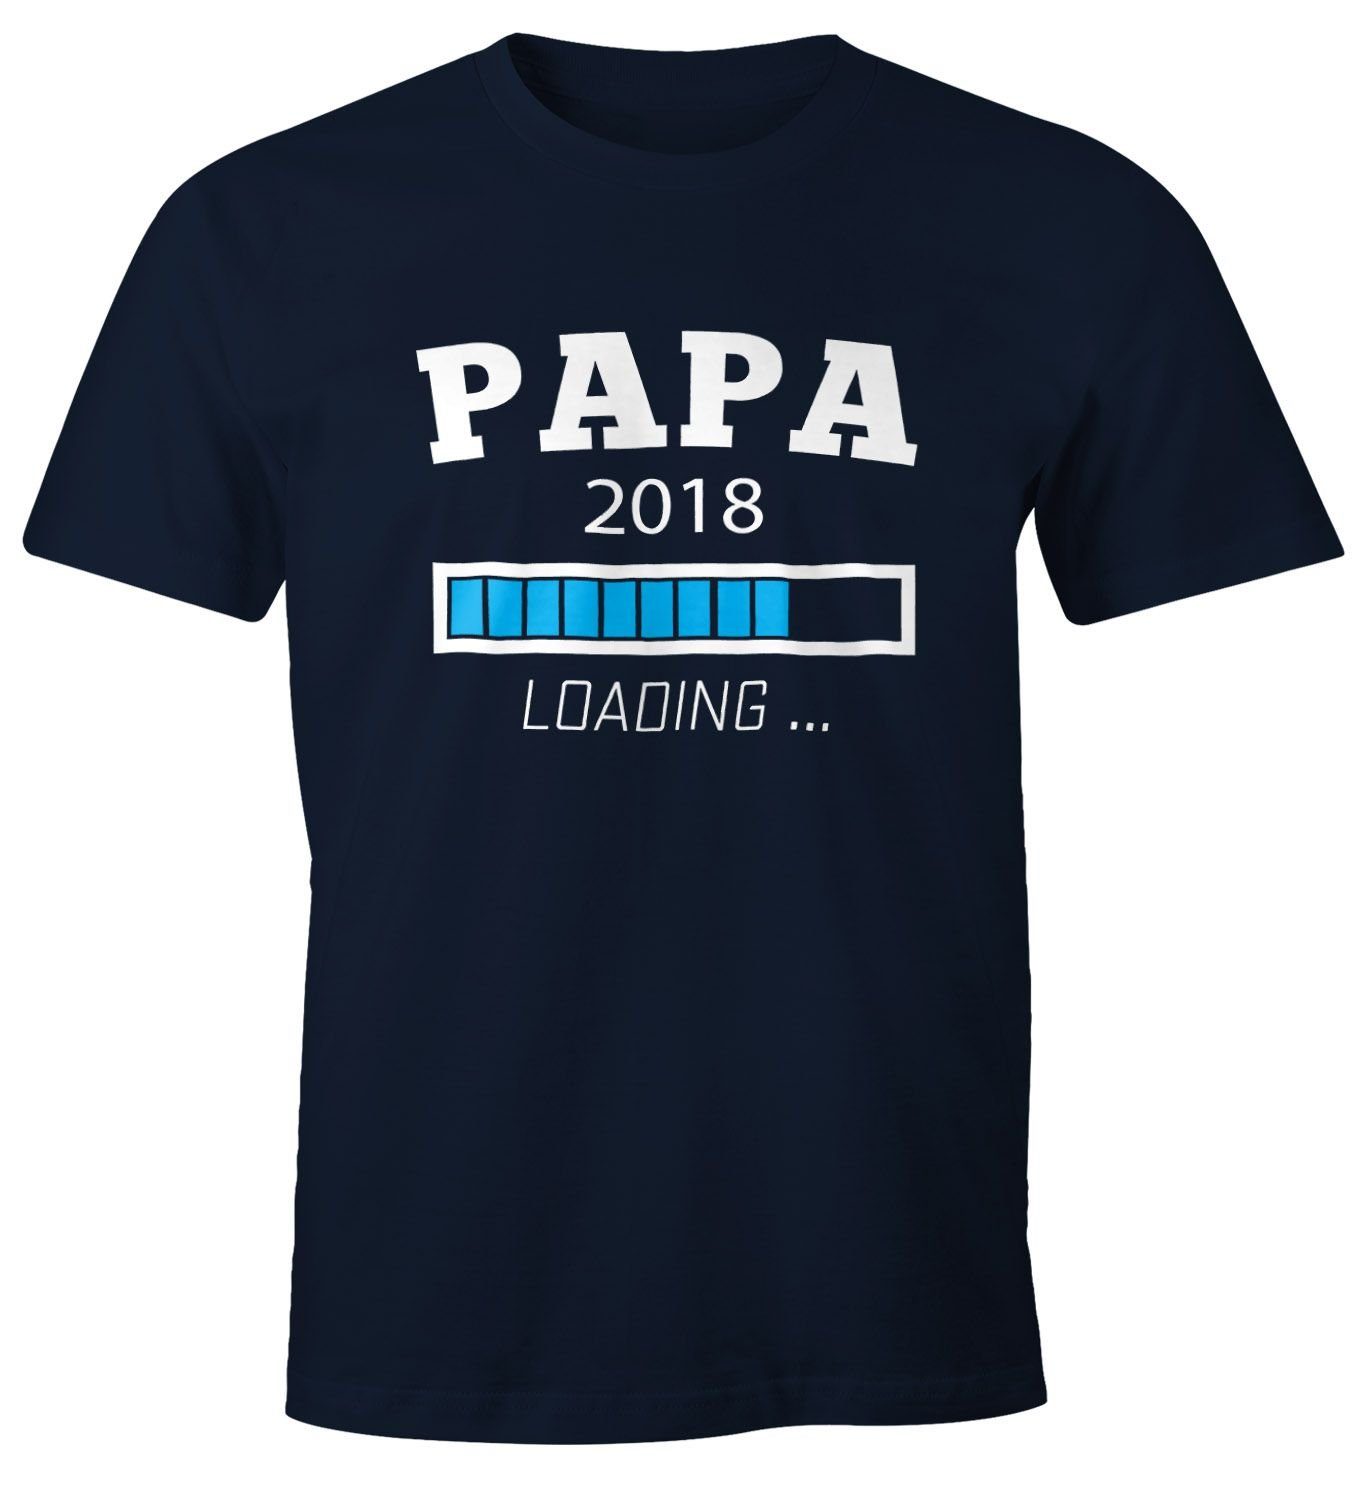 Herren mit MoonWorks Moonworks® Print 2018 Print-Shirt navy Loading T-Shirt Papa Shirt